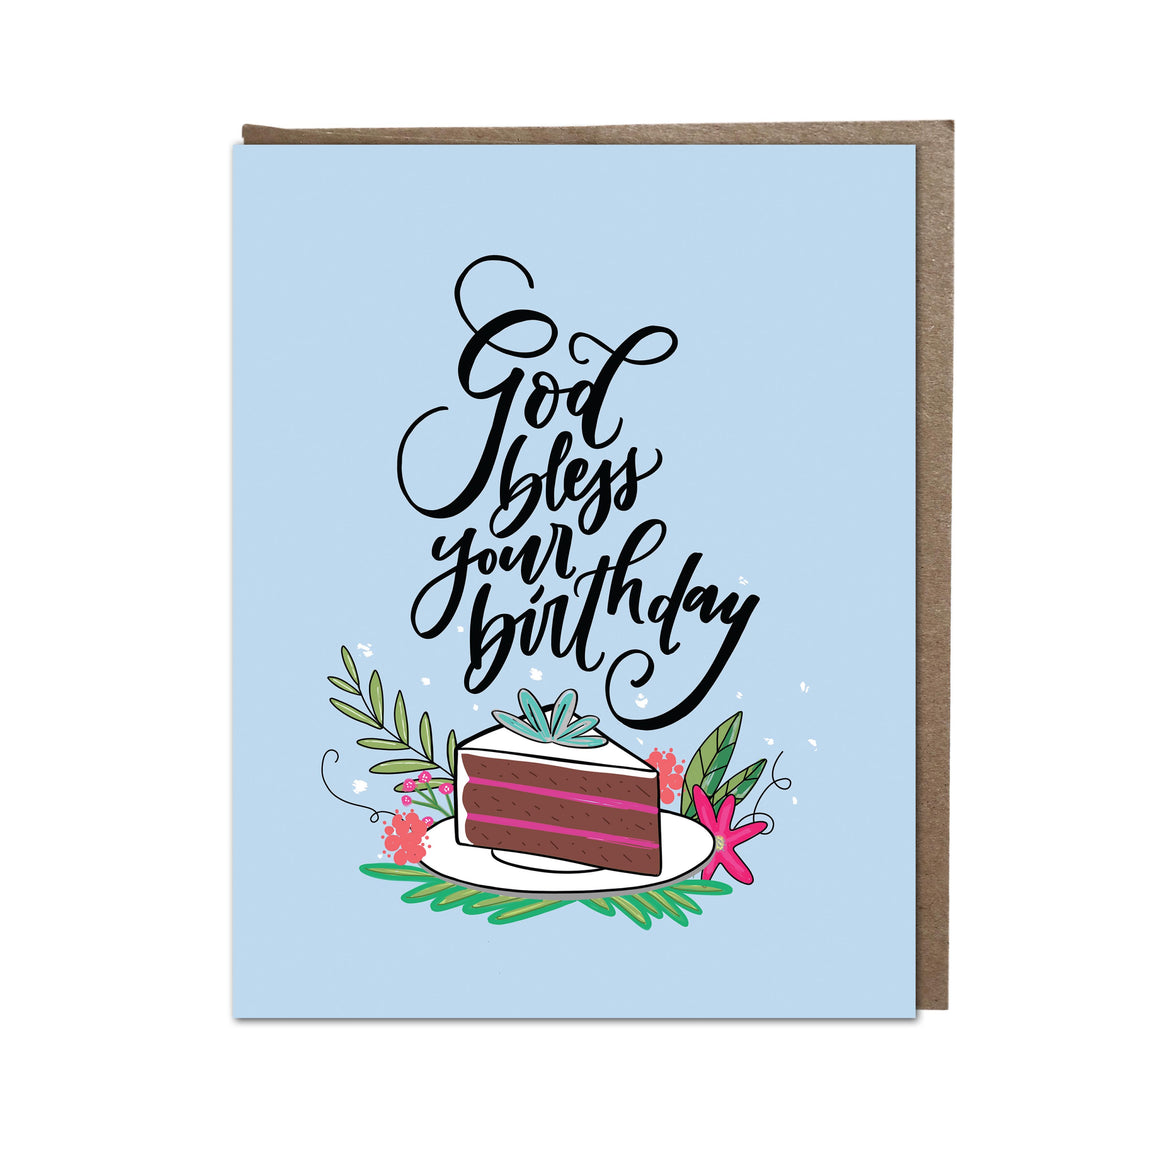 "God Bless Your Birthday" card